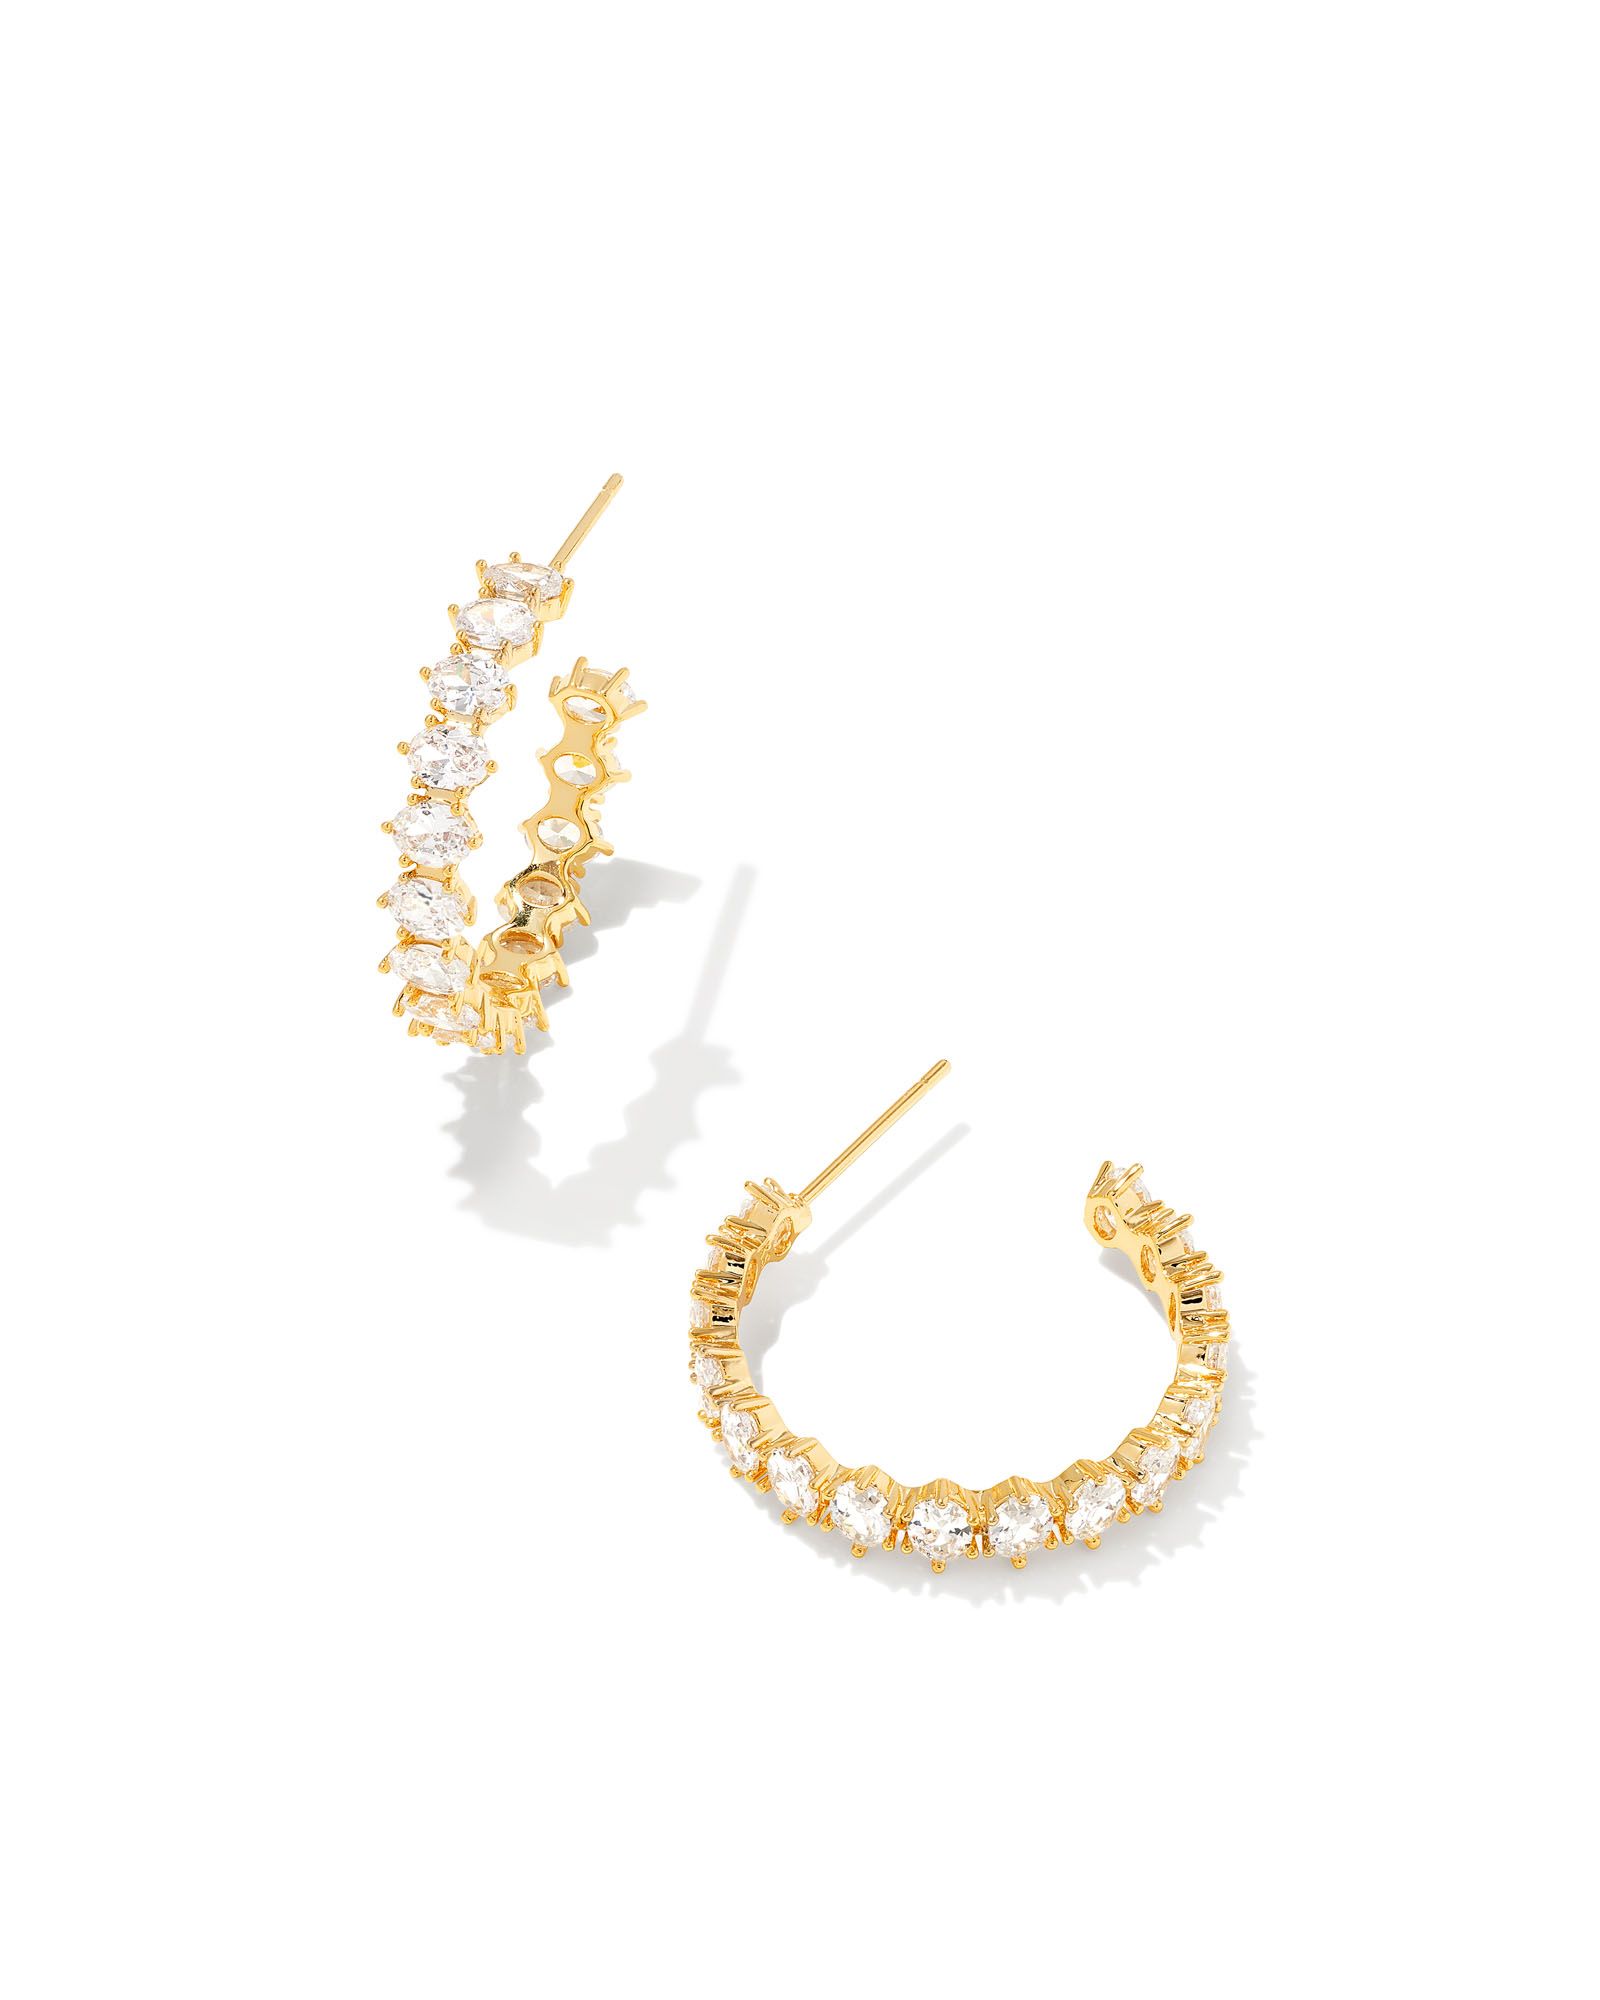 Cailin Gold Crystal Hoop Earrings in White Crystal | Kendra Scott | Kendra Scott